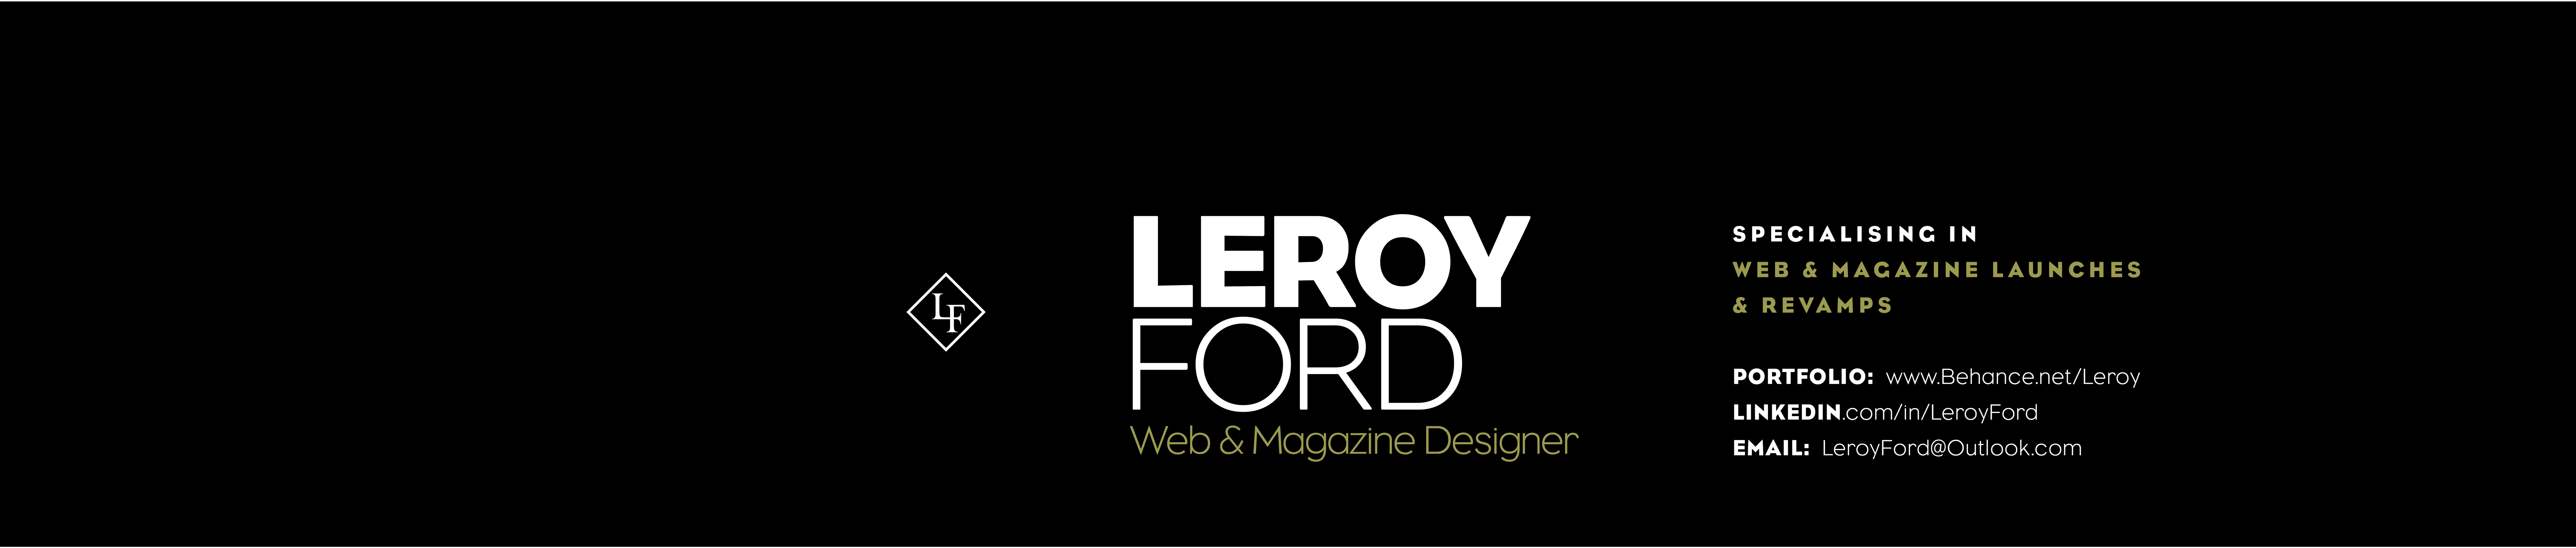 Baner profilu użytkownika LEROY FORD